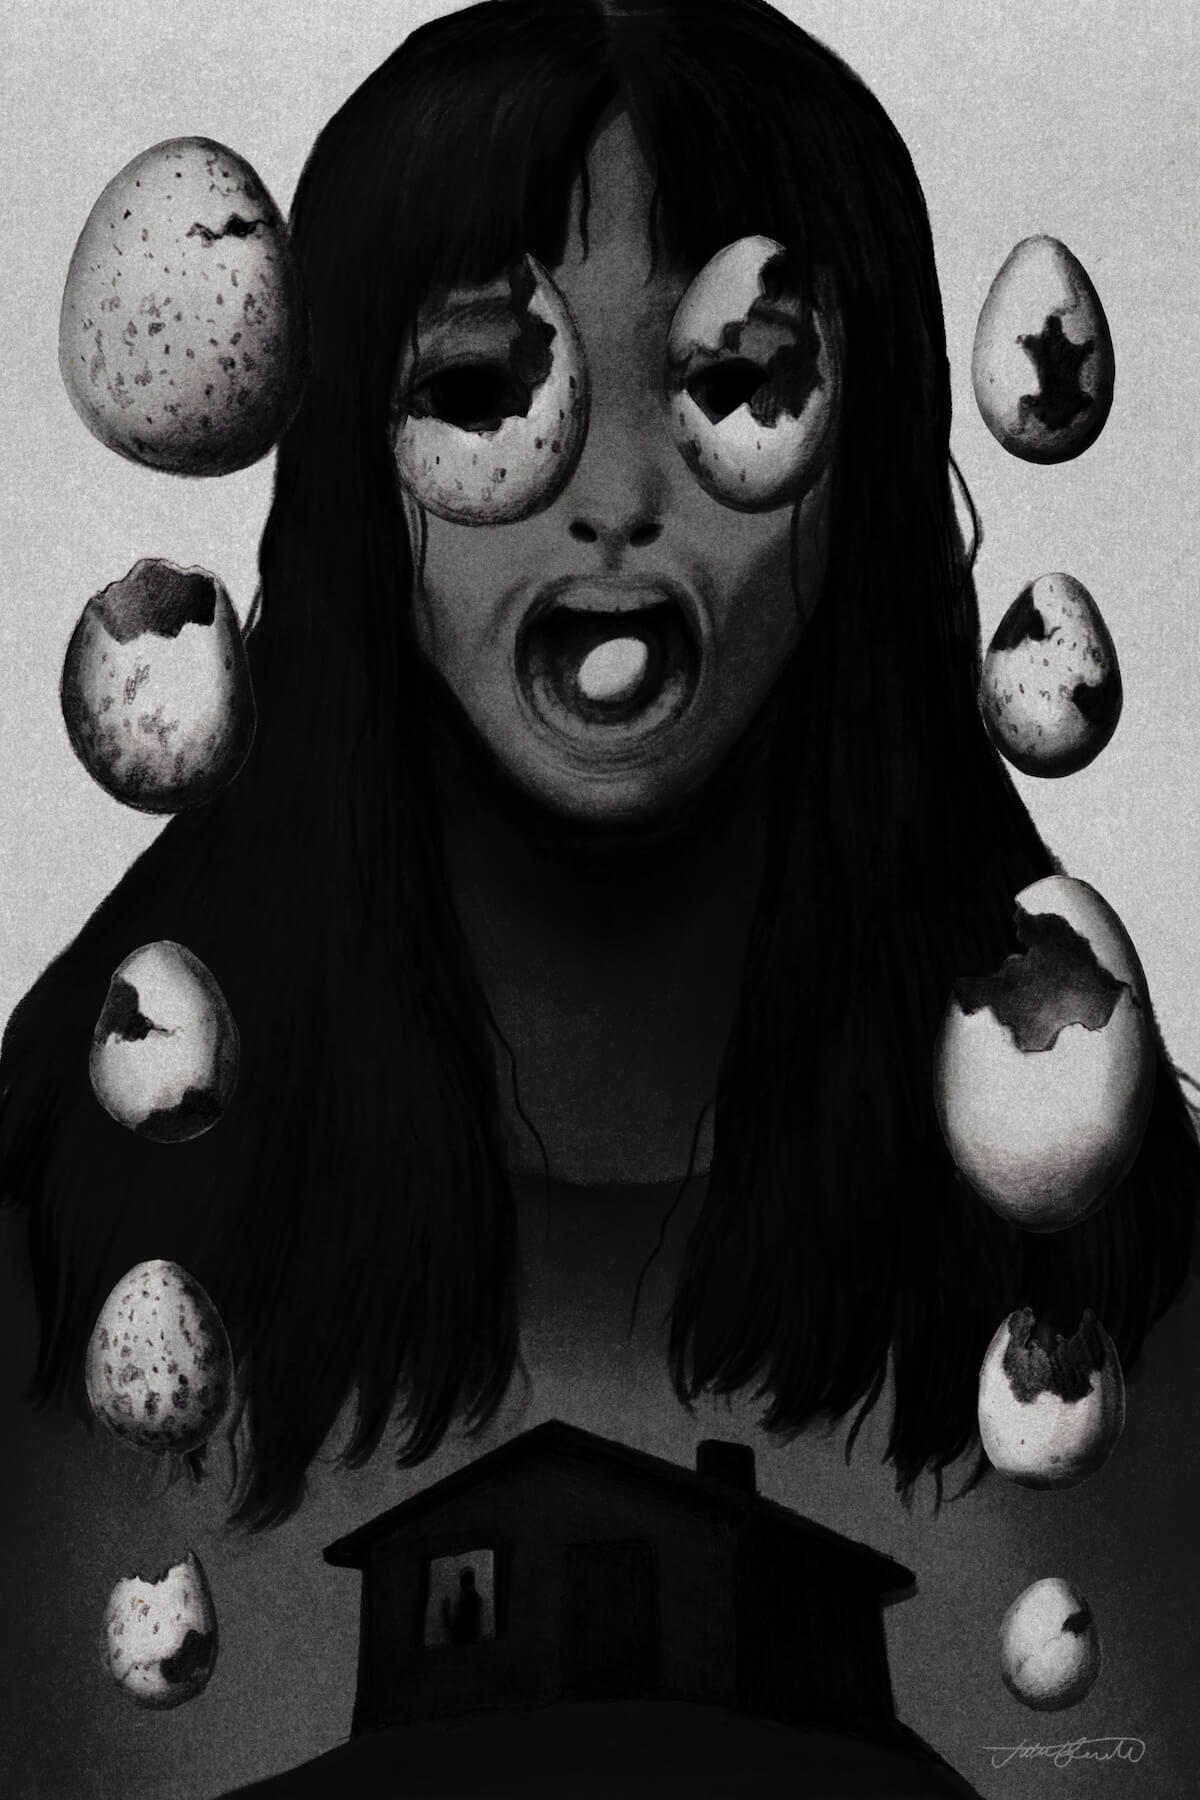 Artist Julie Benbassat for Eggshells in Death in the Mouth